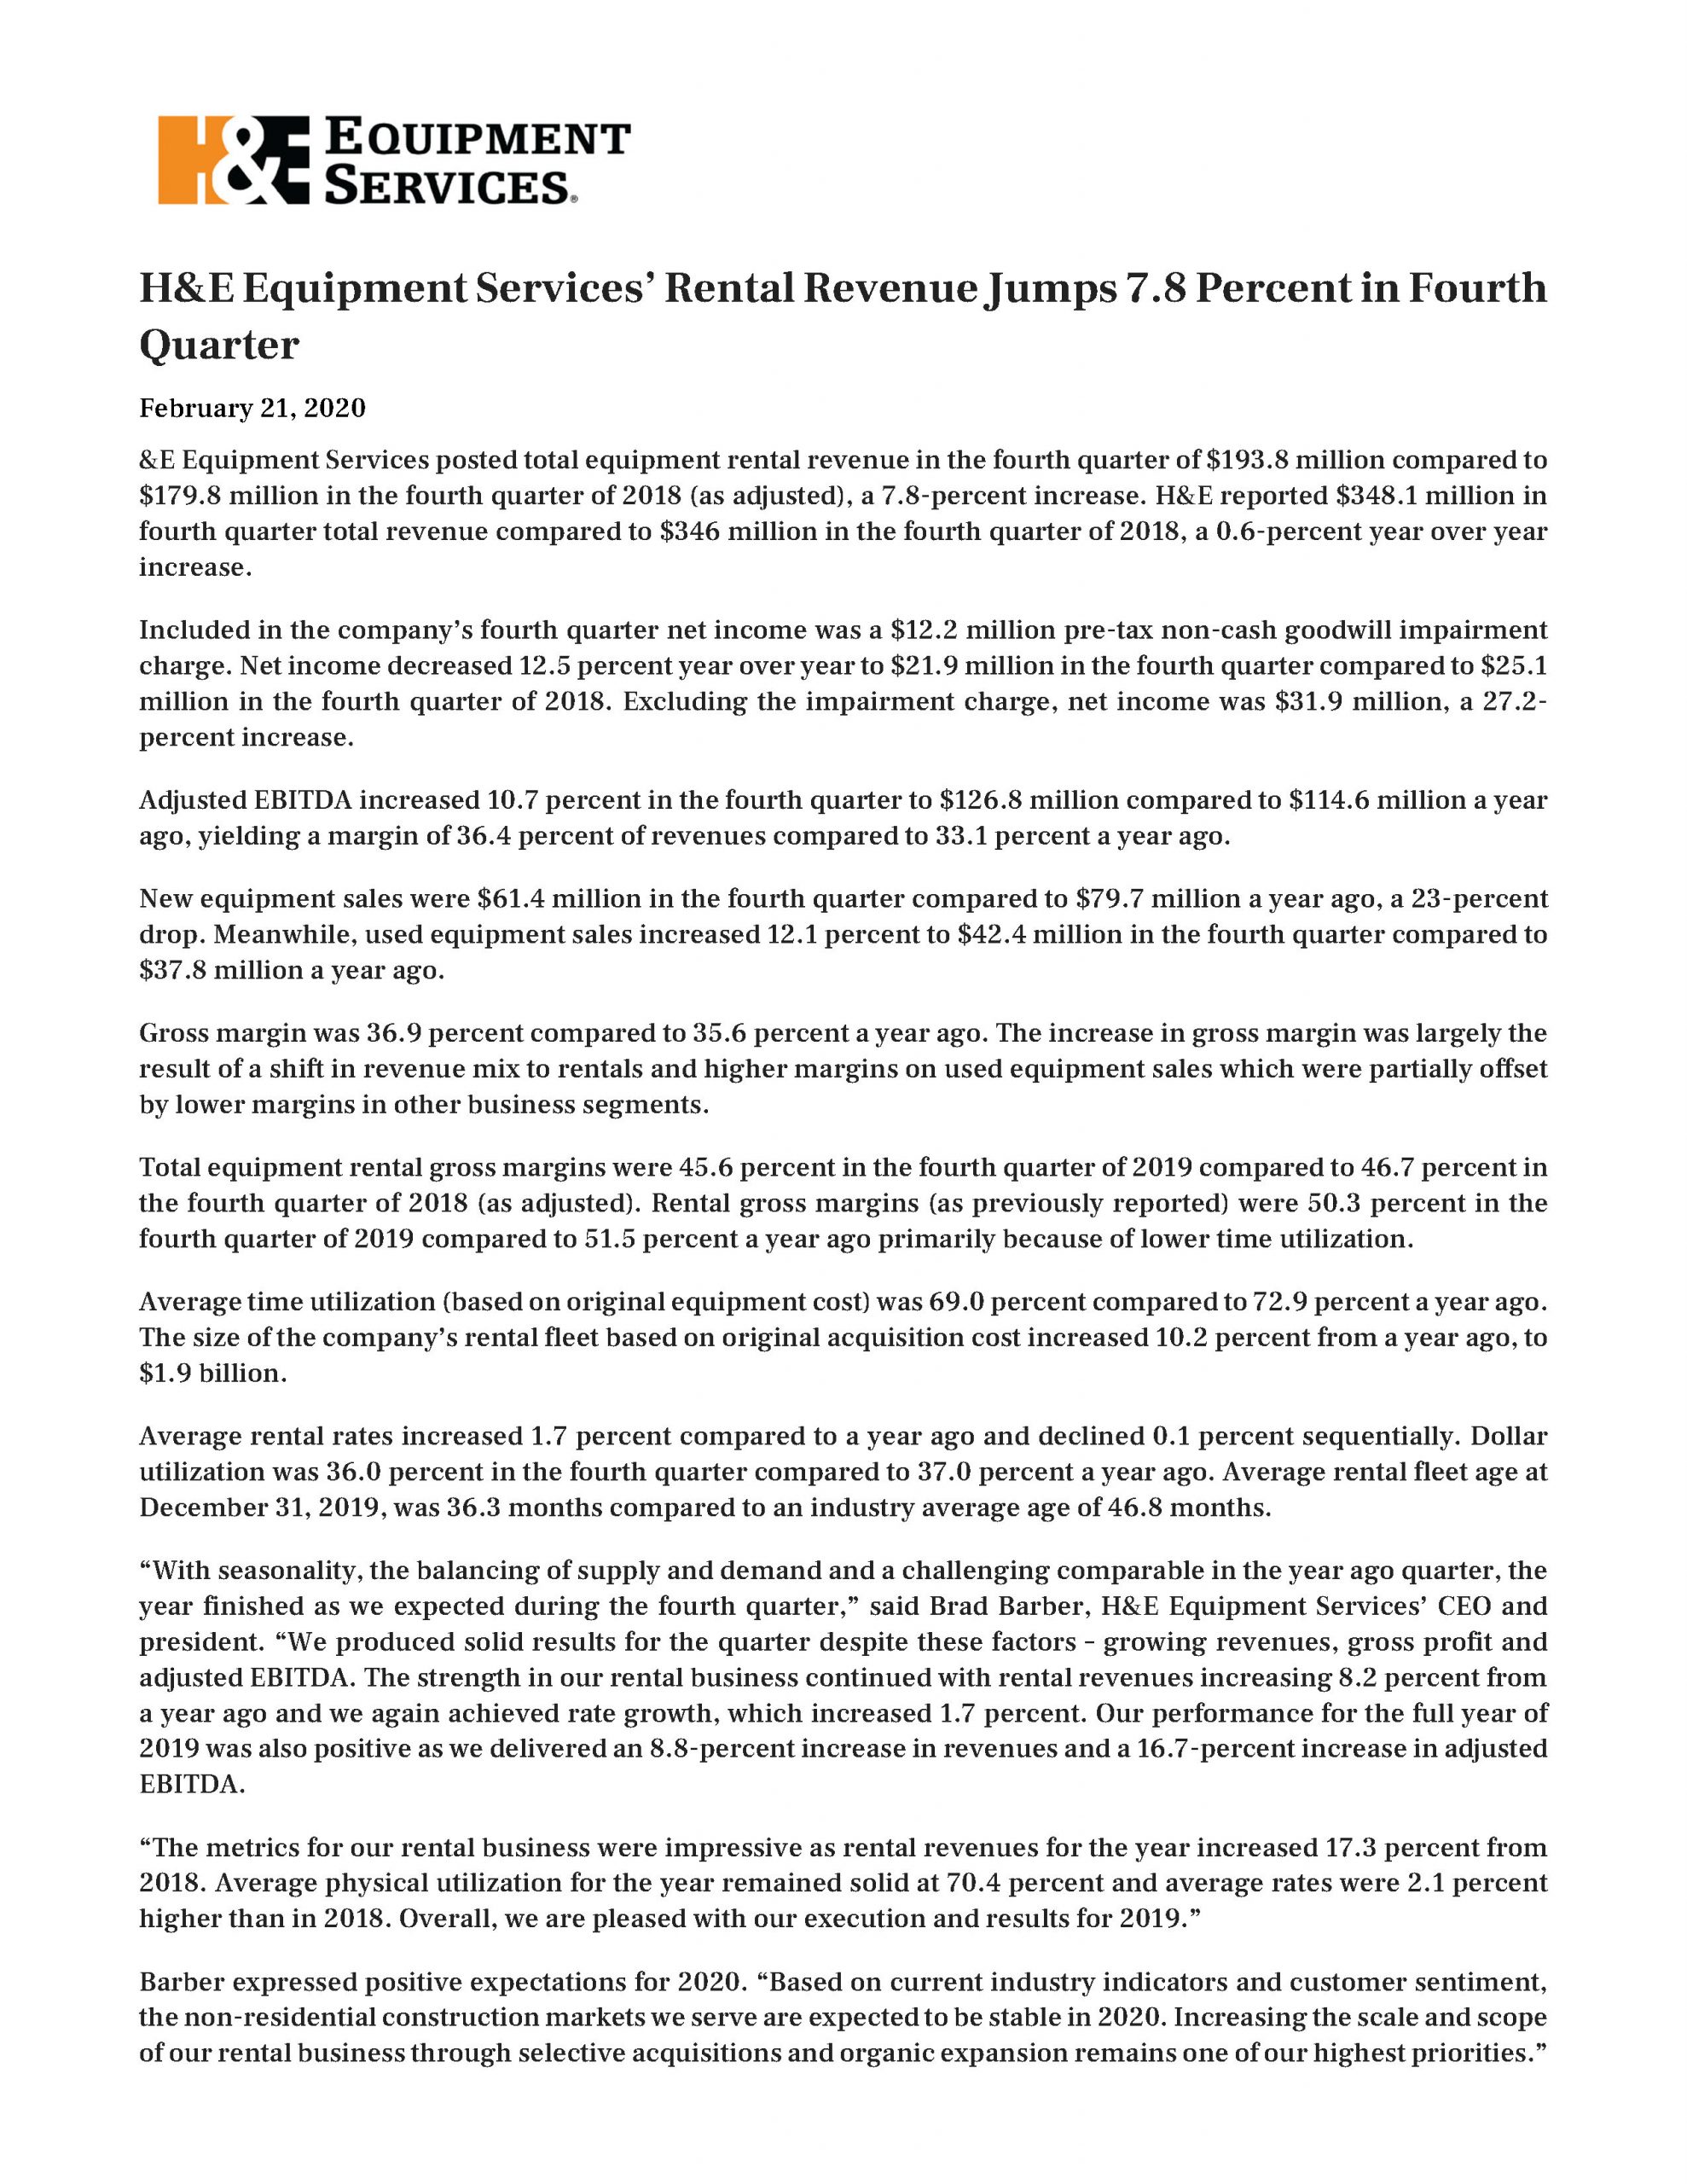 H&E Equipment Services' Rental Revenue Jumps 7.8 Percent in Fourth Quarter 2.21.2020